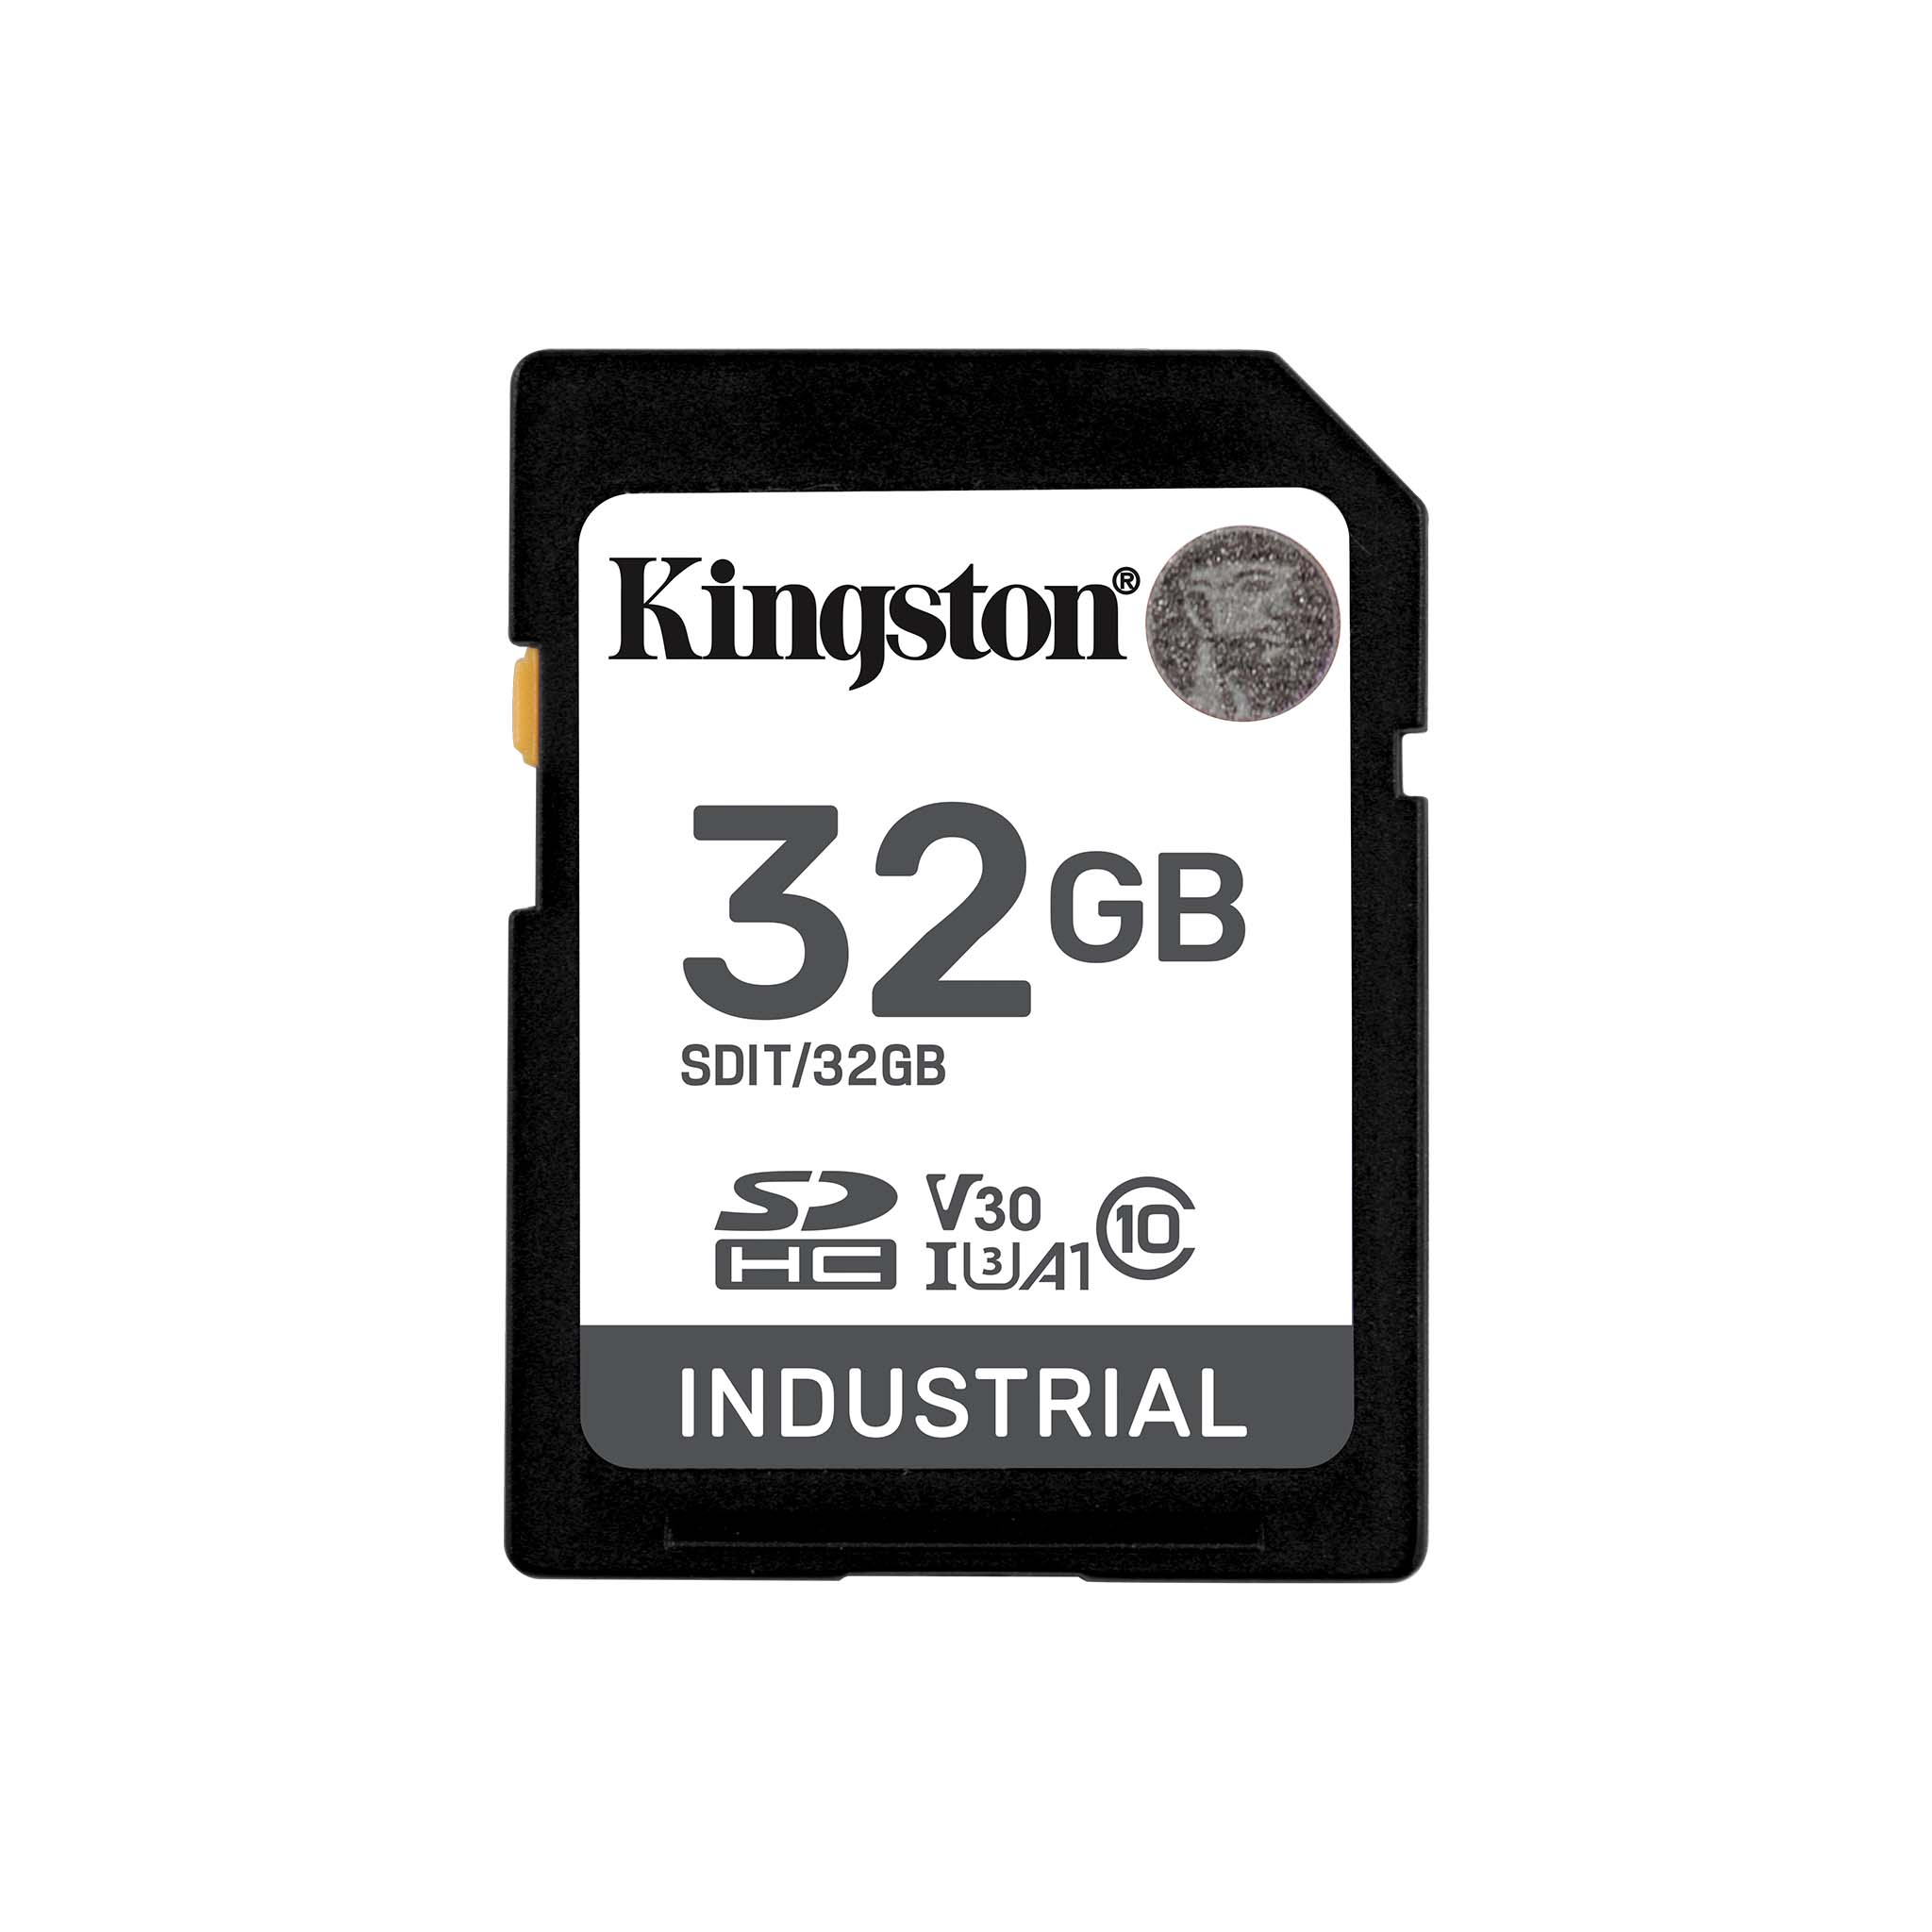 Kingston Industrial/ SDHC/ 32GB/ UHS-I U3 / Class 10